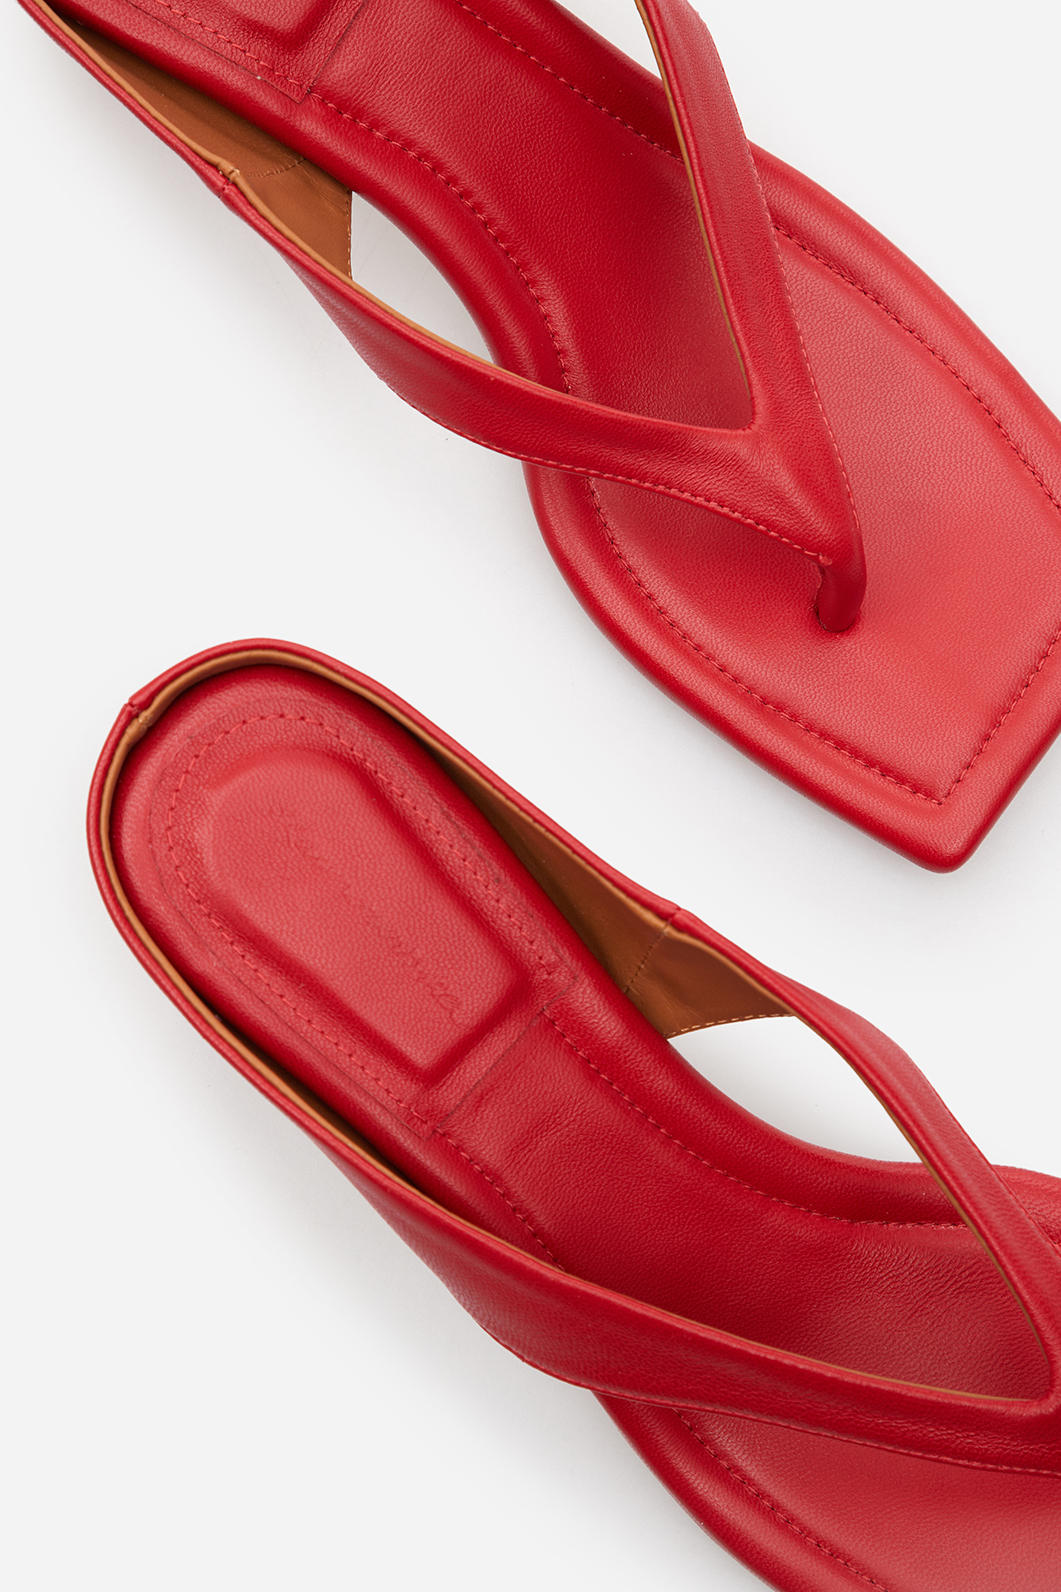 Elsa red leather
sandals /5 cm/